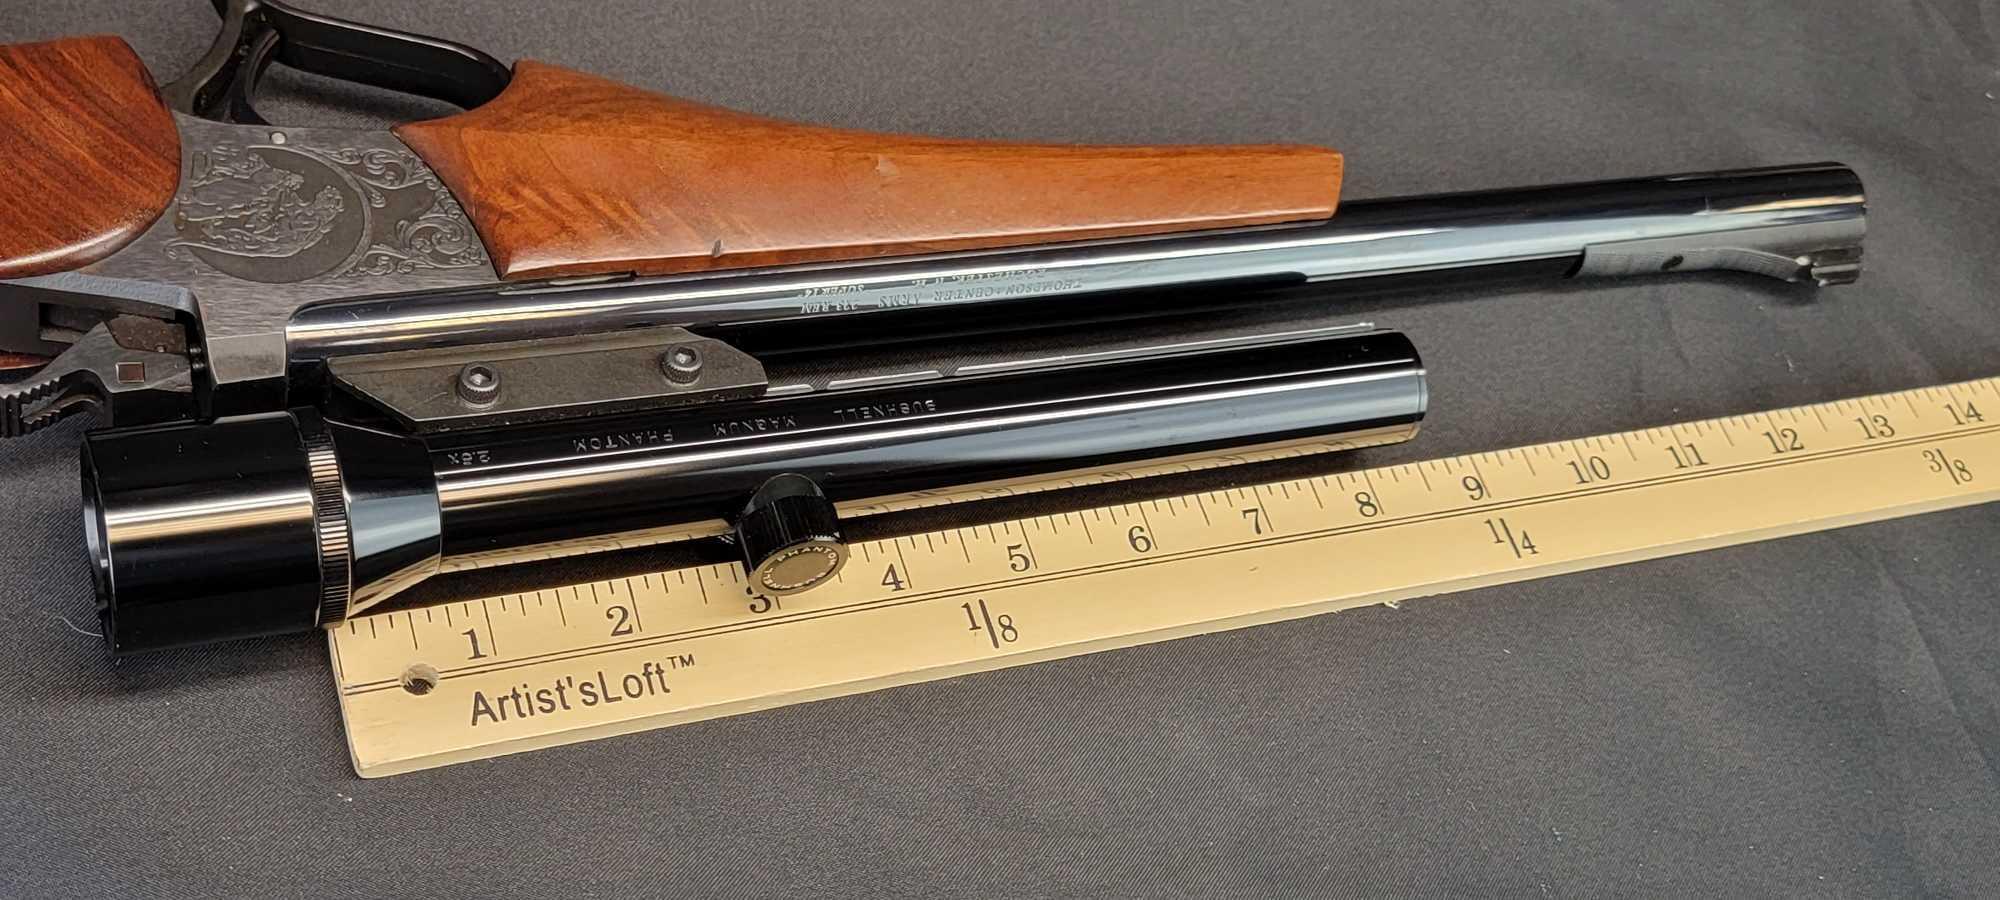 Thompson Scoped Contender Pistol, .223 Super 14 w/ Extra 7mm Barrel